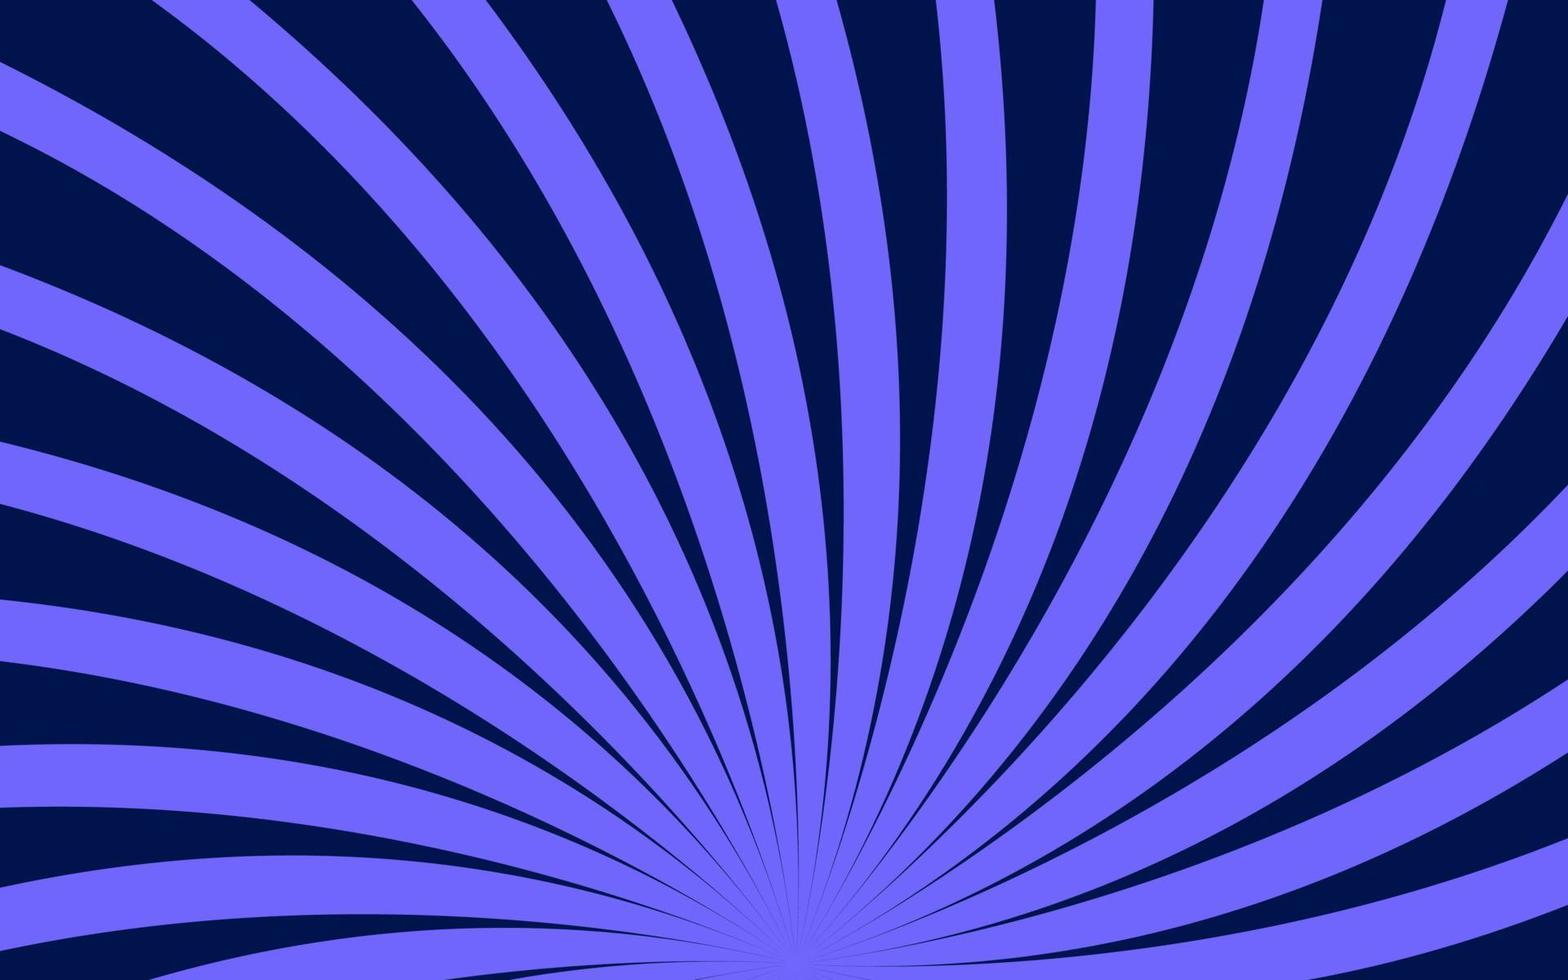 Sunburst elemento rayas radiales fondos, textura radial, cómic Sunburst diseño de fondo vector